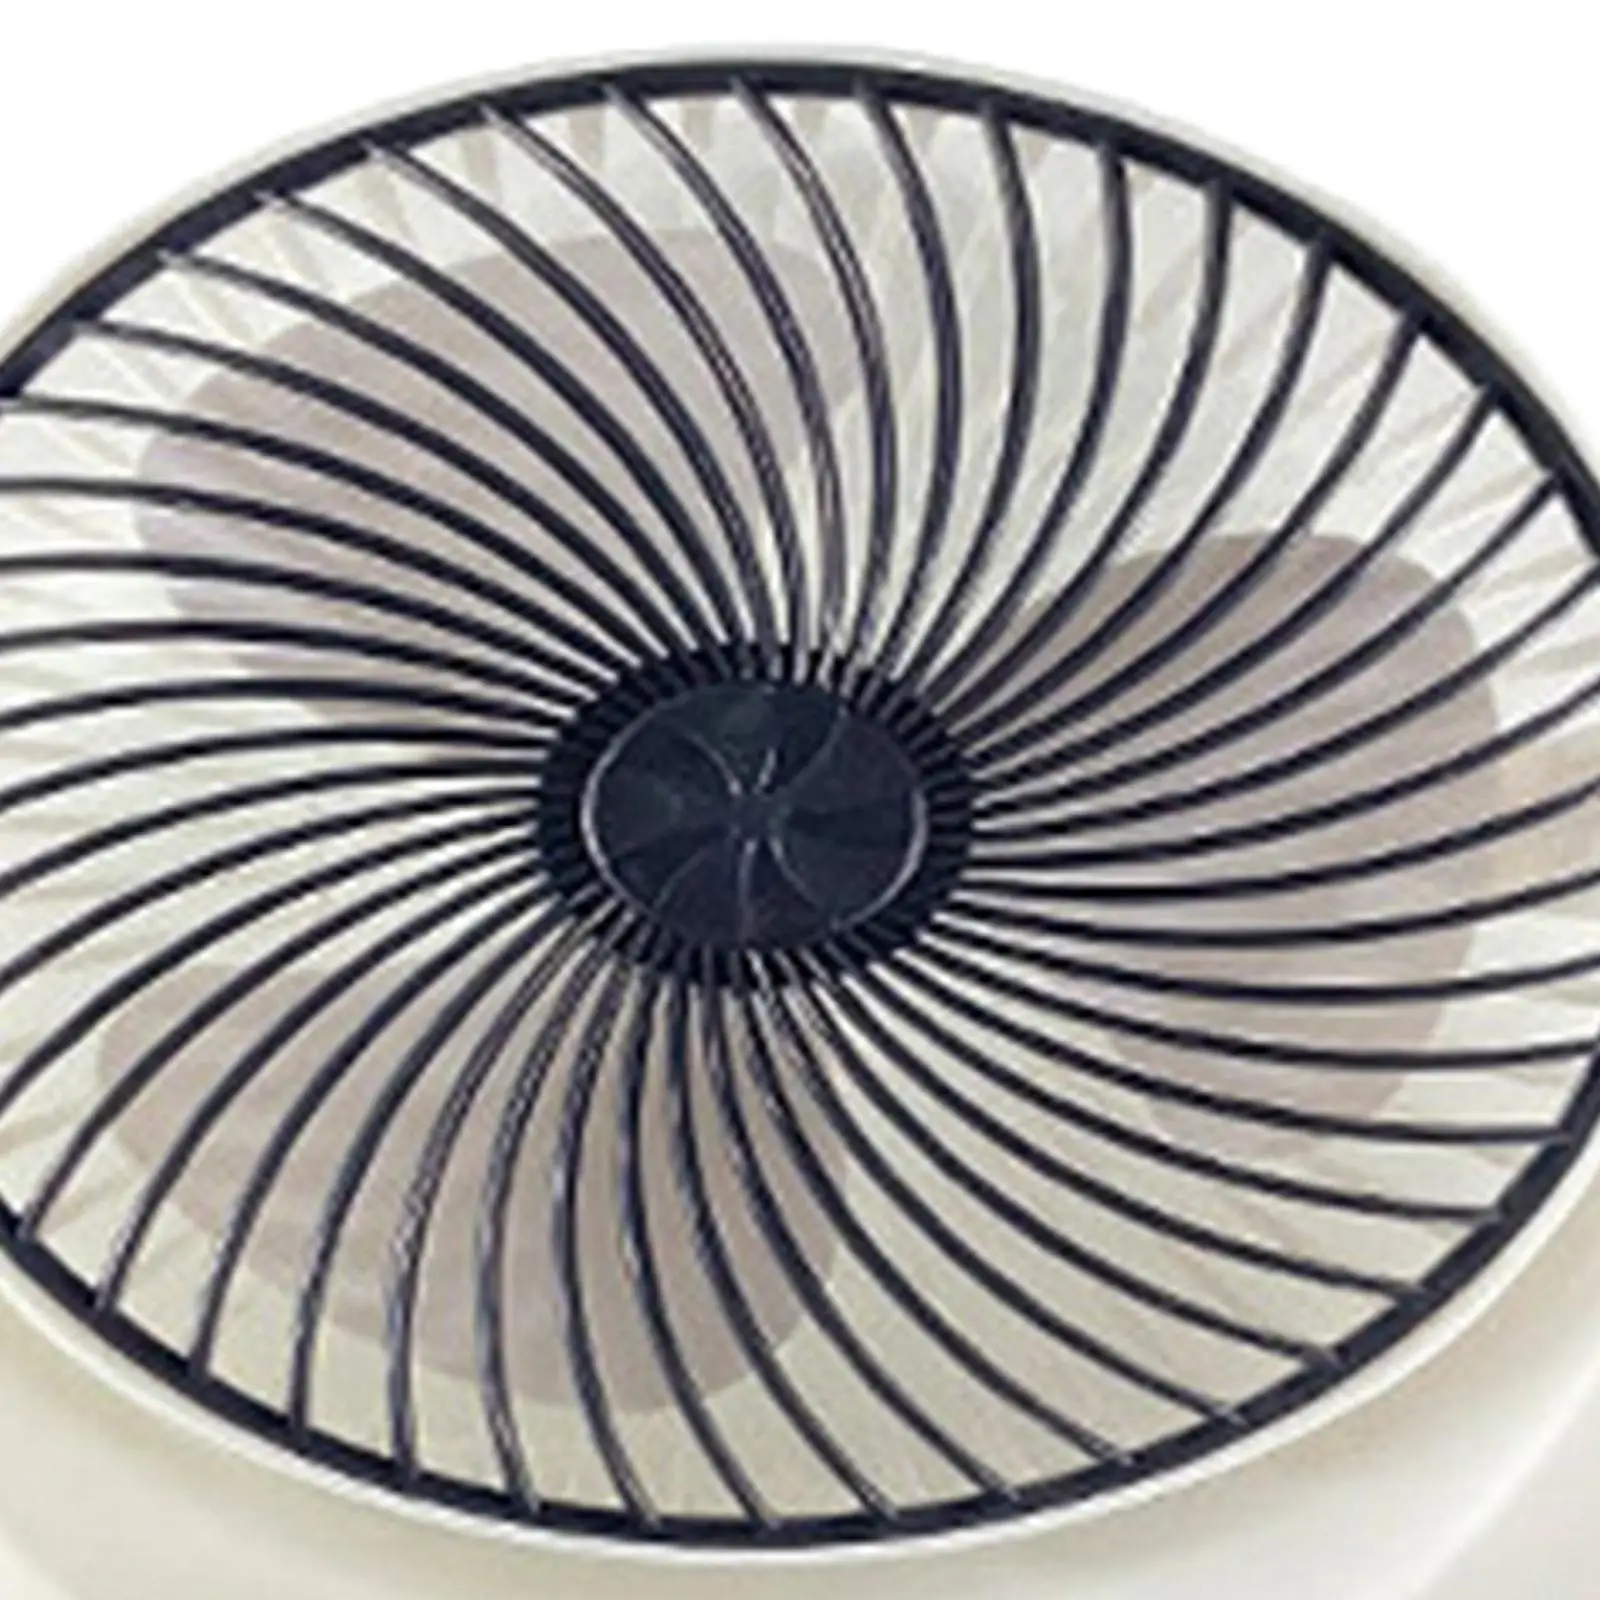 Household Solar Fan Cooling Fan ,Small Ventilator USB Charging Greenhouse Fan for Home, Fishing, Outdoor Picnic, RV,